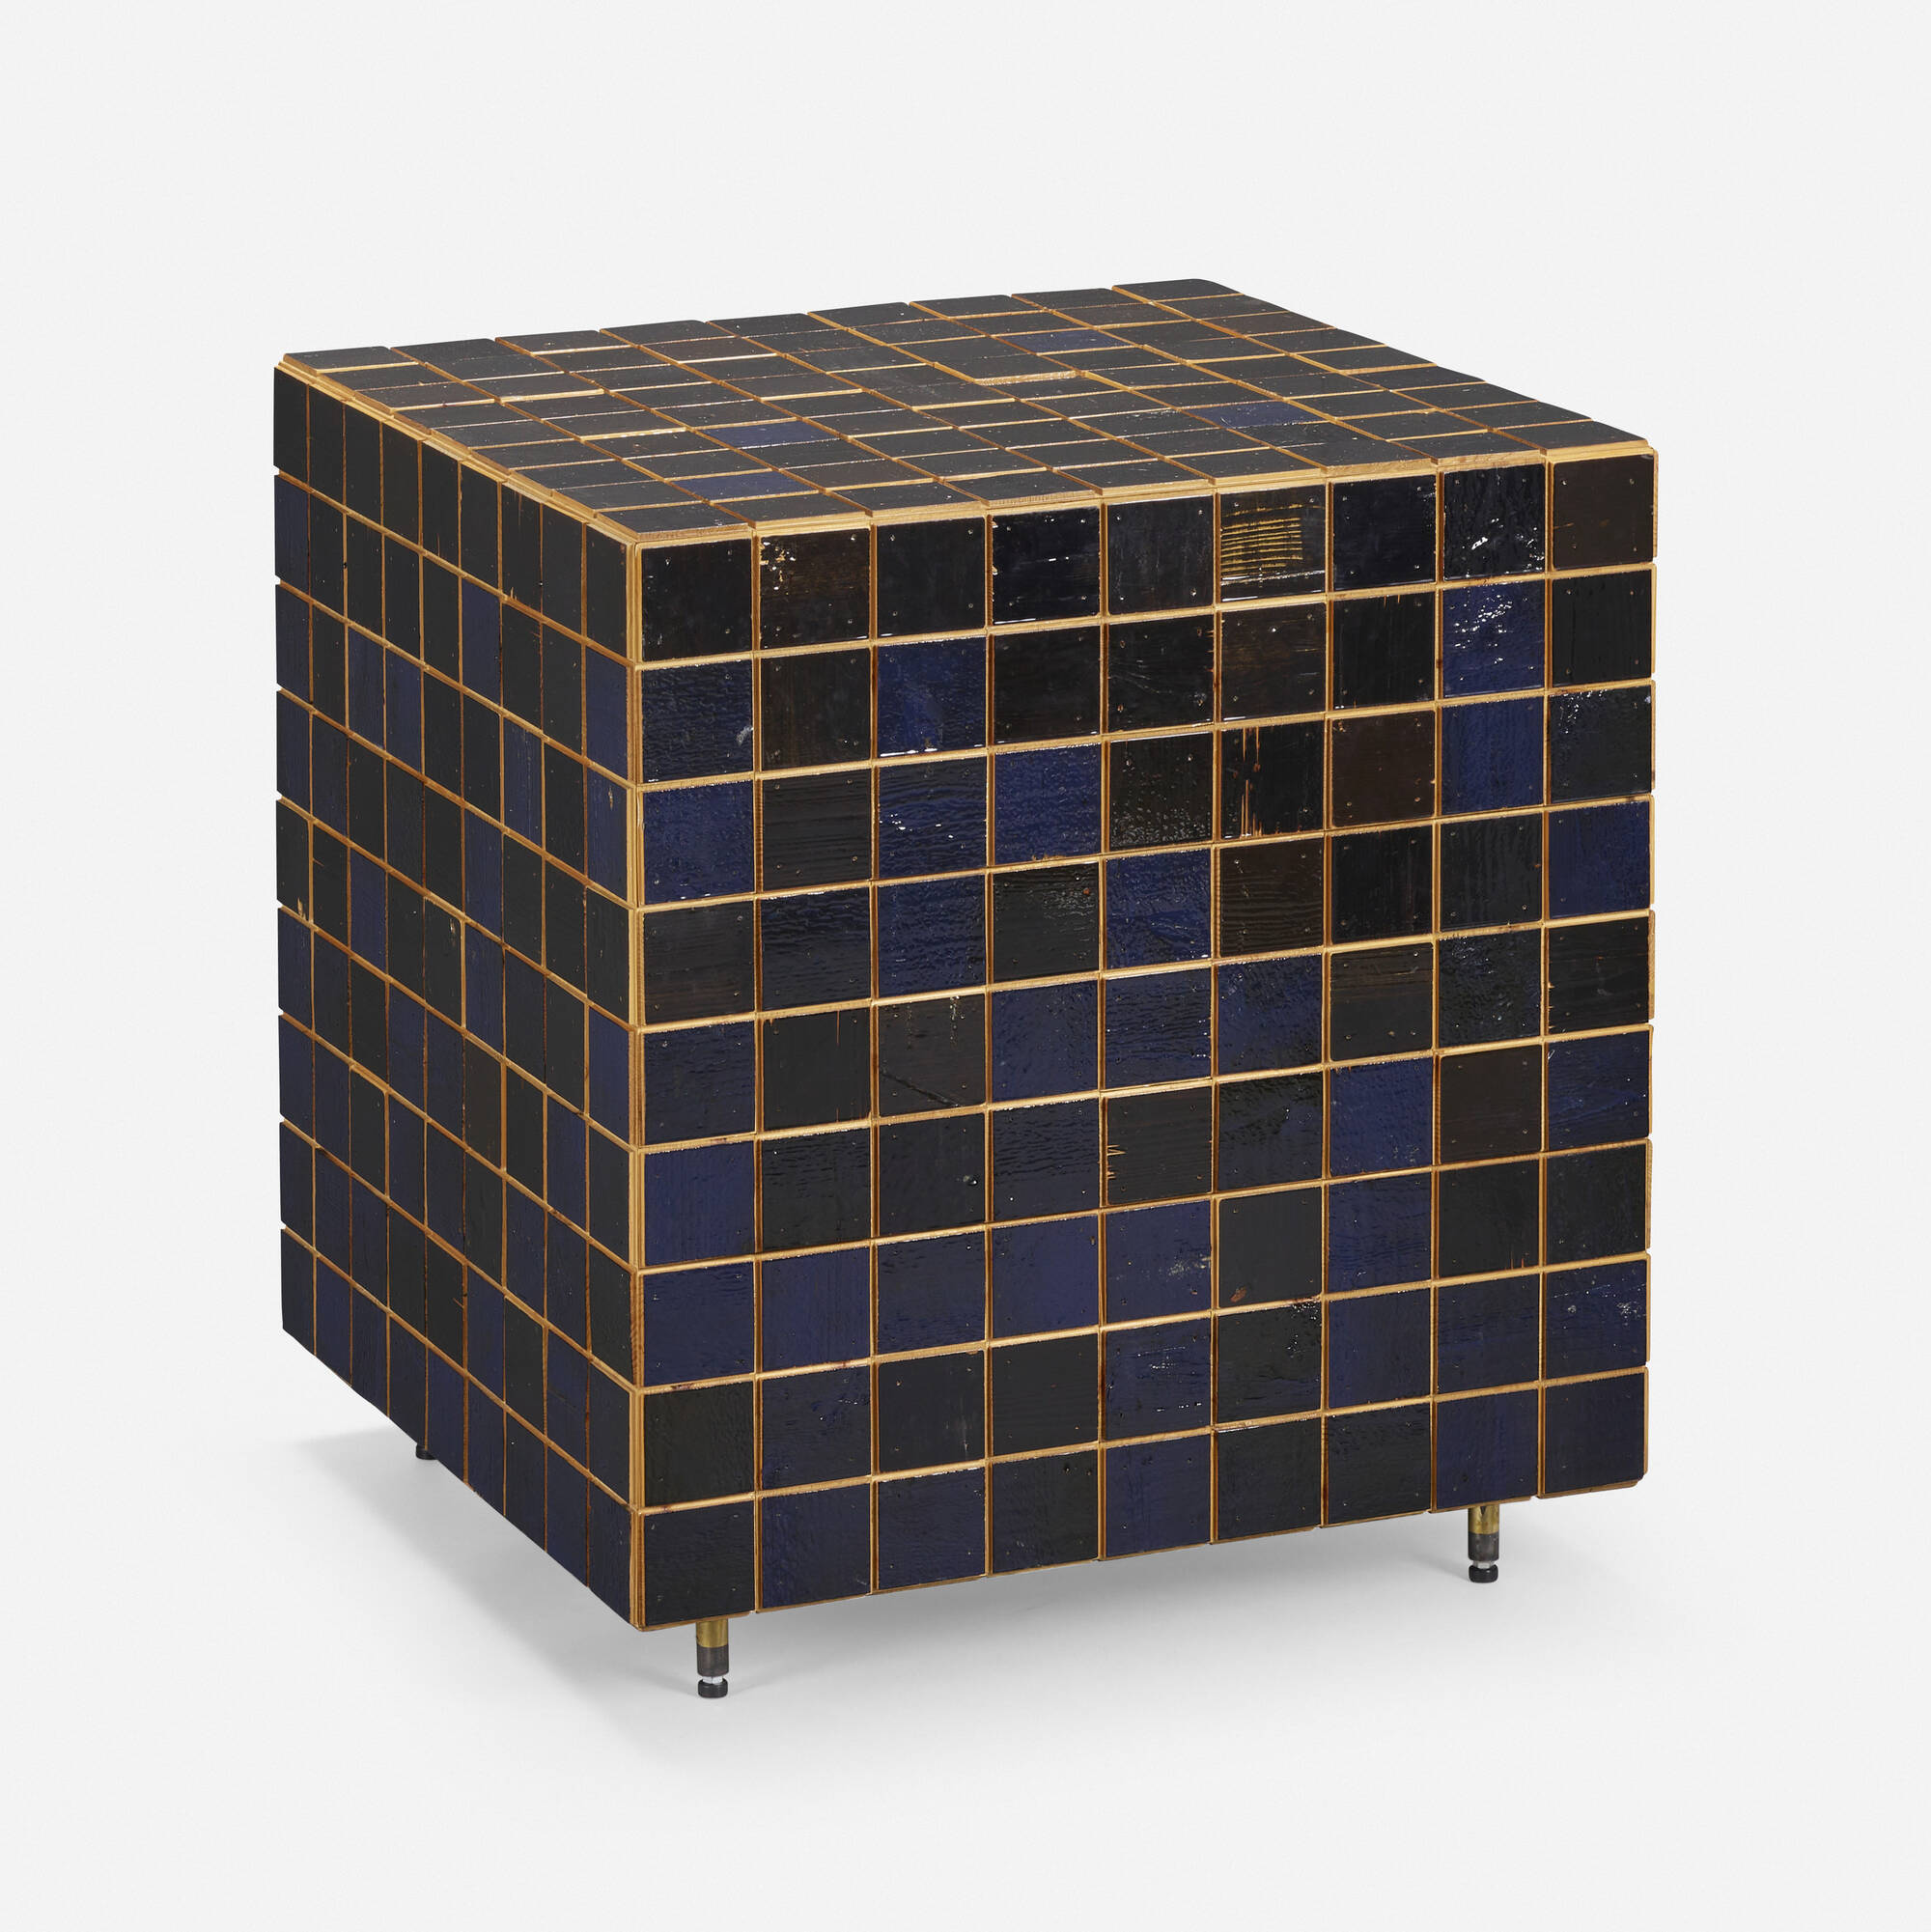 109: PIET HEIN EEK, Waste Tile Cube cabinet < Contemporary Design 